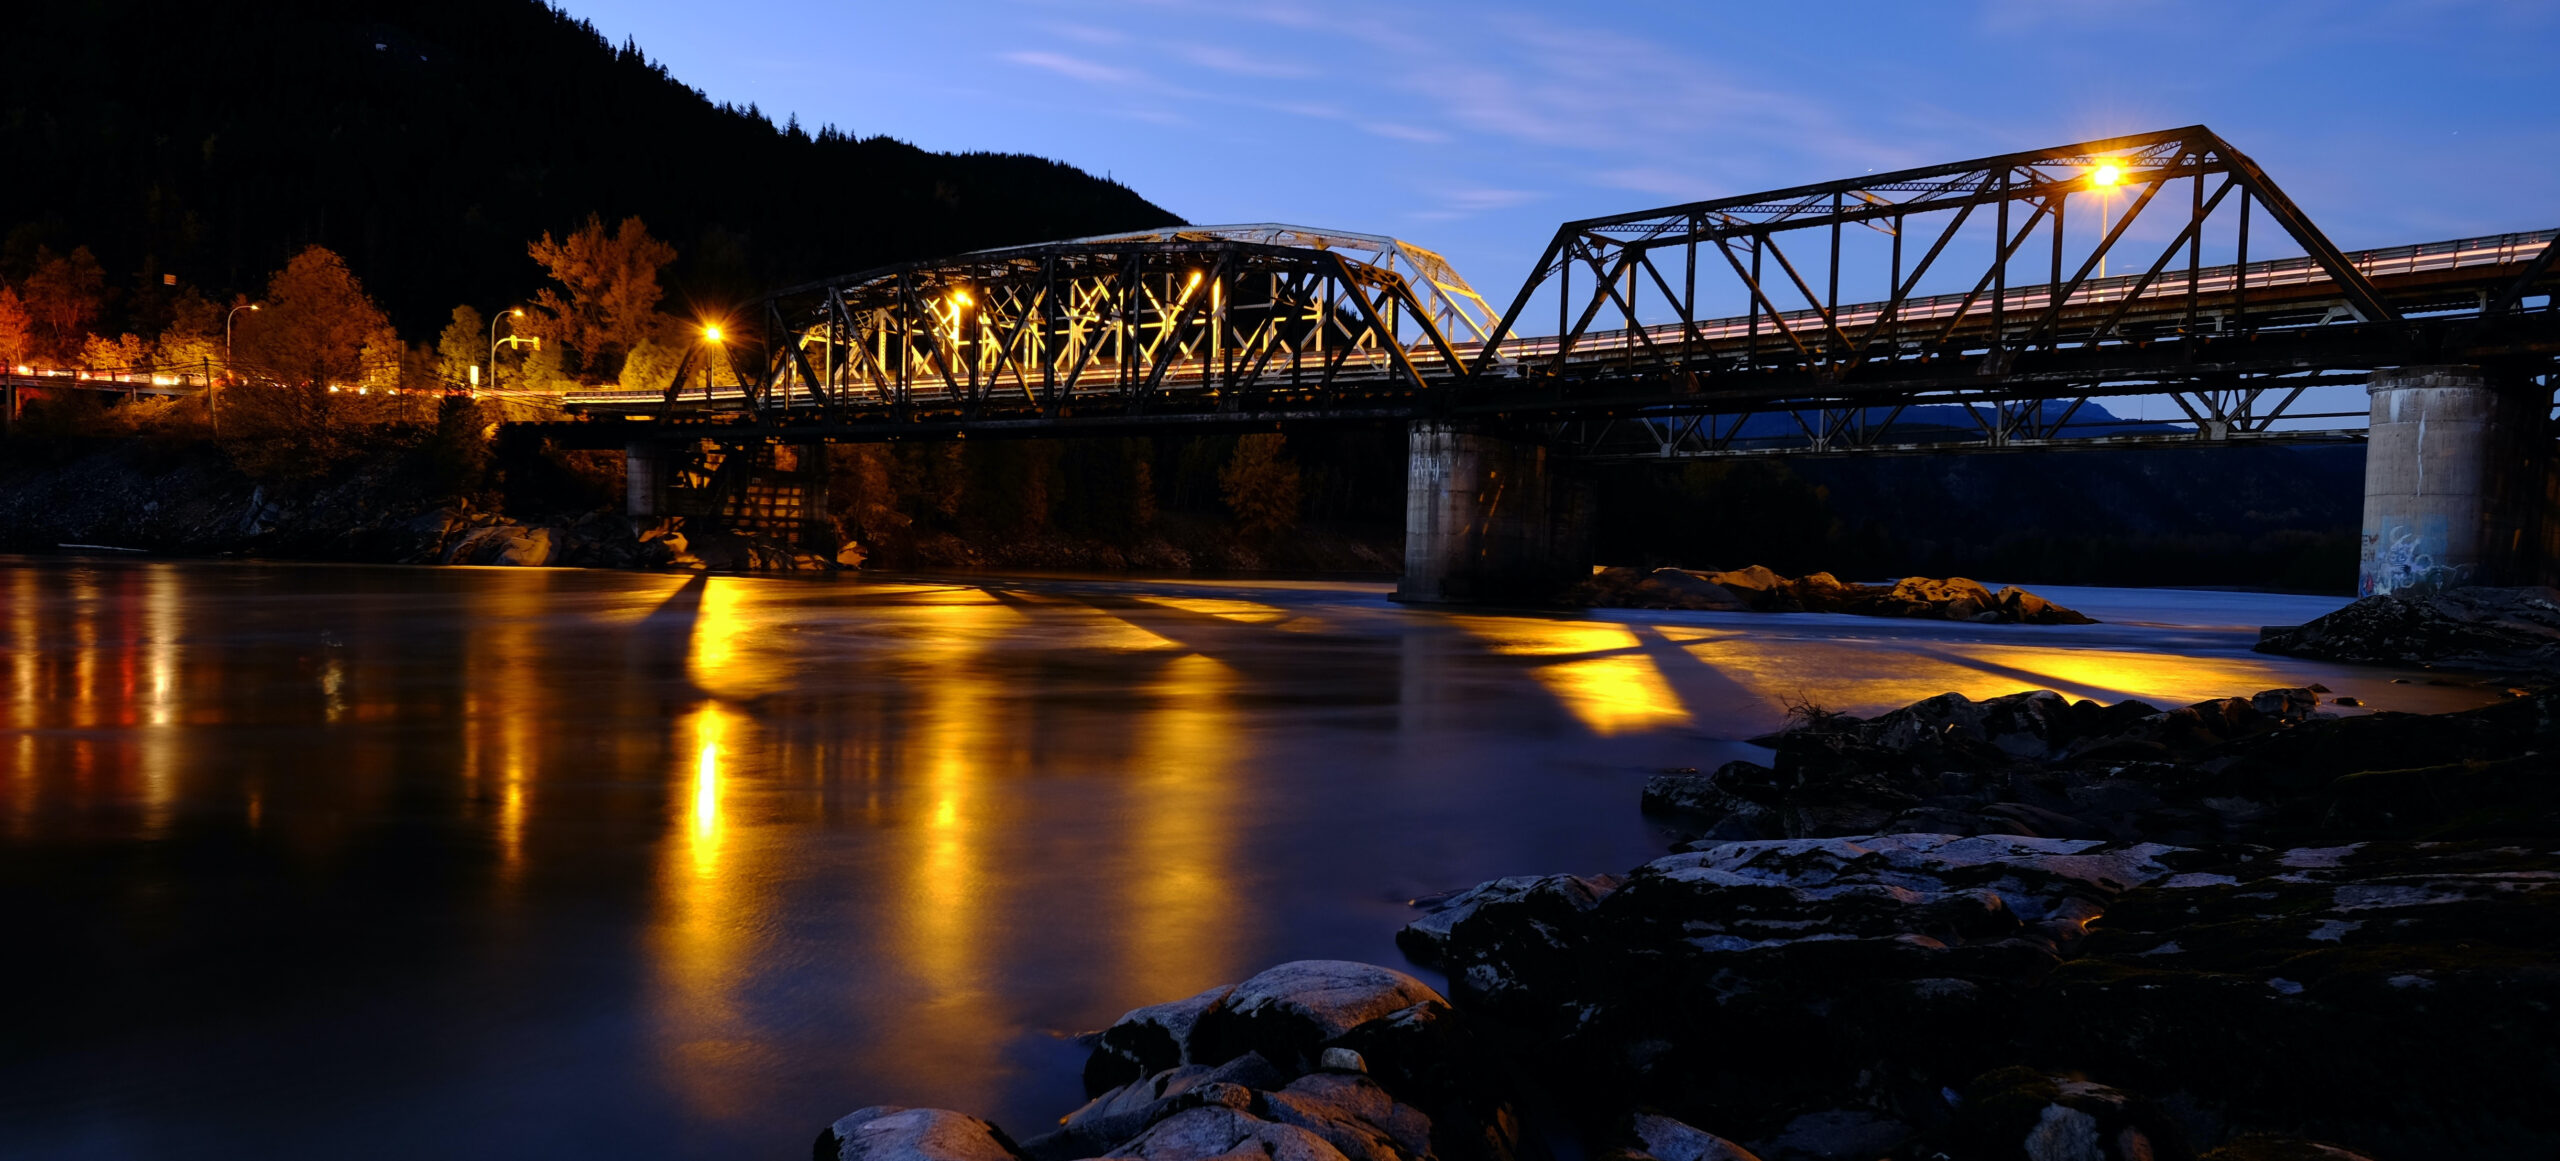 Old Bridge, Terrace, BC Canada at night.